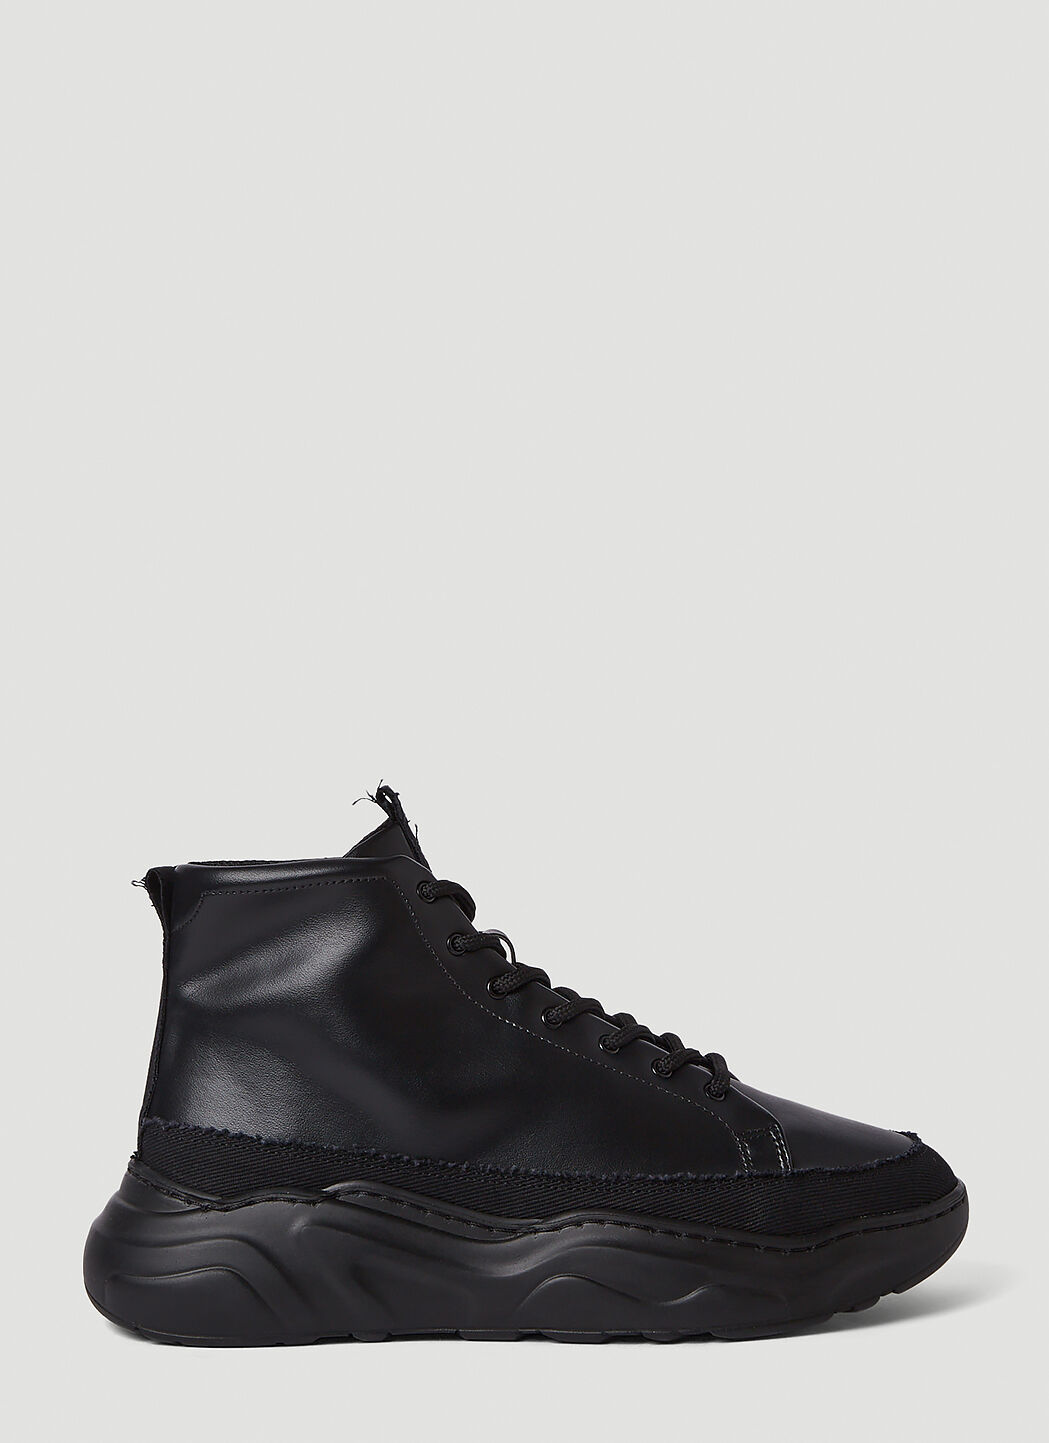 Phileo x Salomon Essentielle High Top Sneakers Black phs0354001